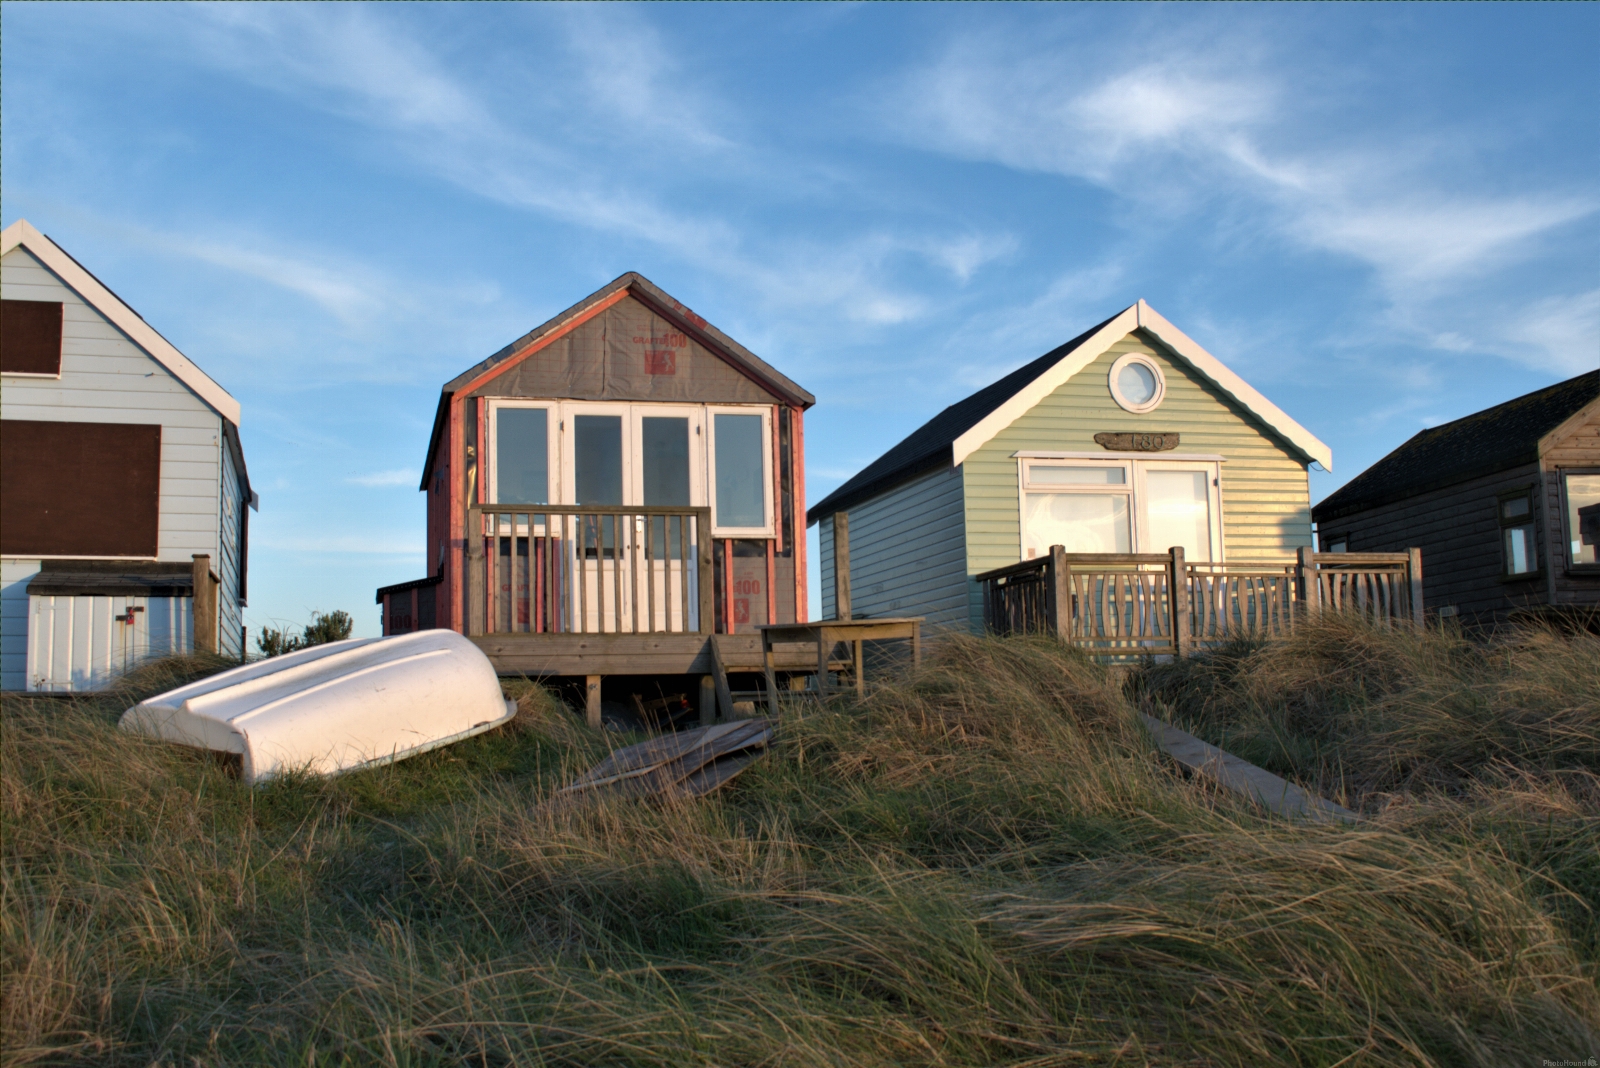 Image of Beach huts at Mudeford Sandbank by michael bennett